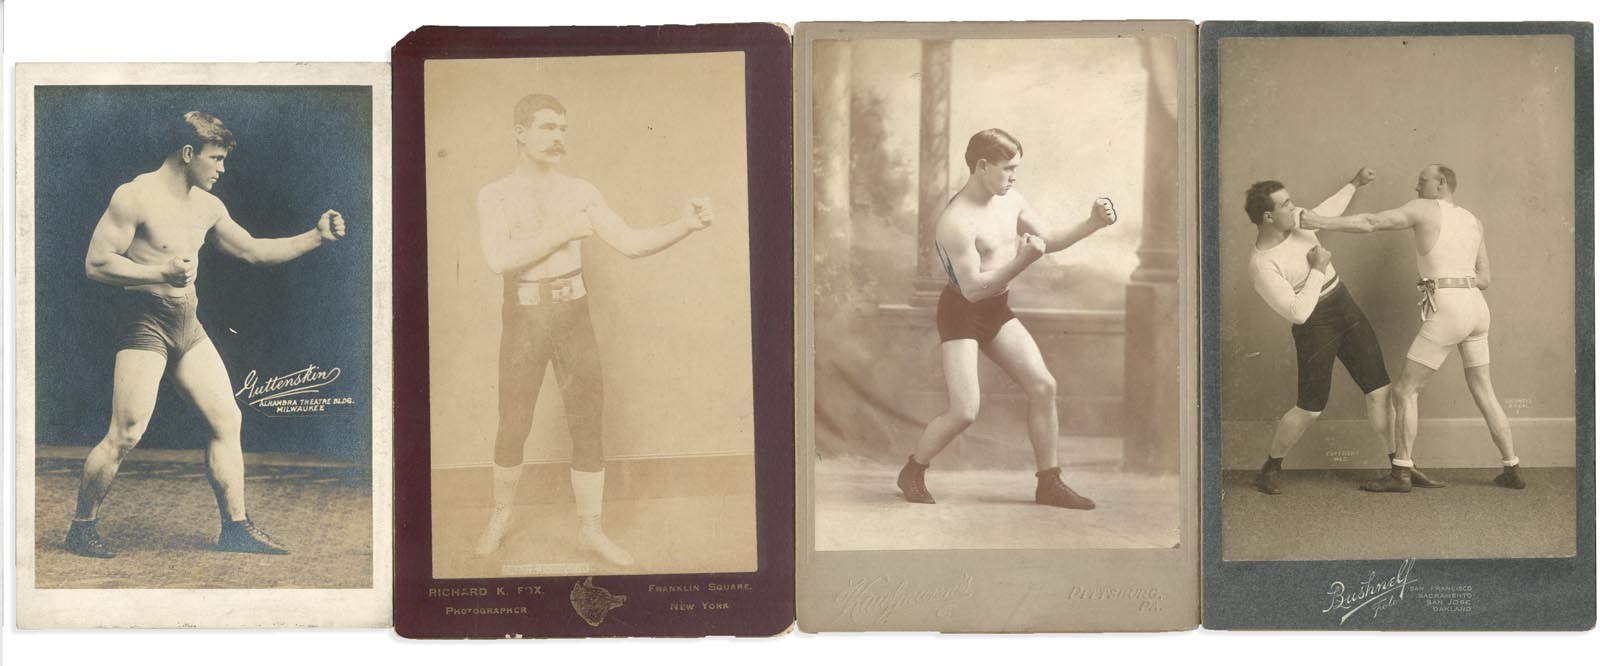 Muhammad Ali & Boxing - Early Boxing Cabinets & Photographs (13)